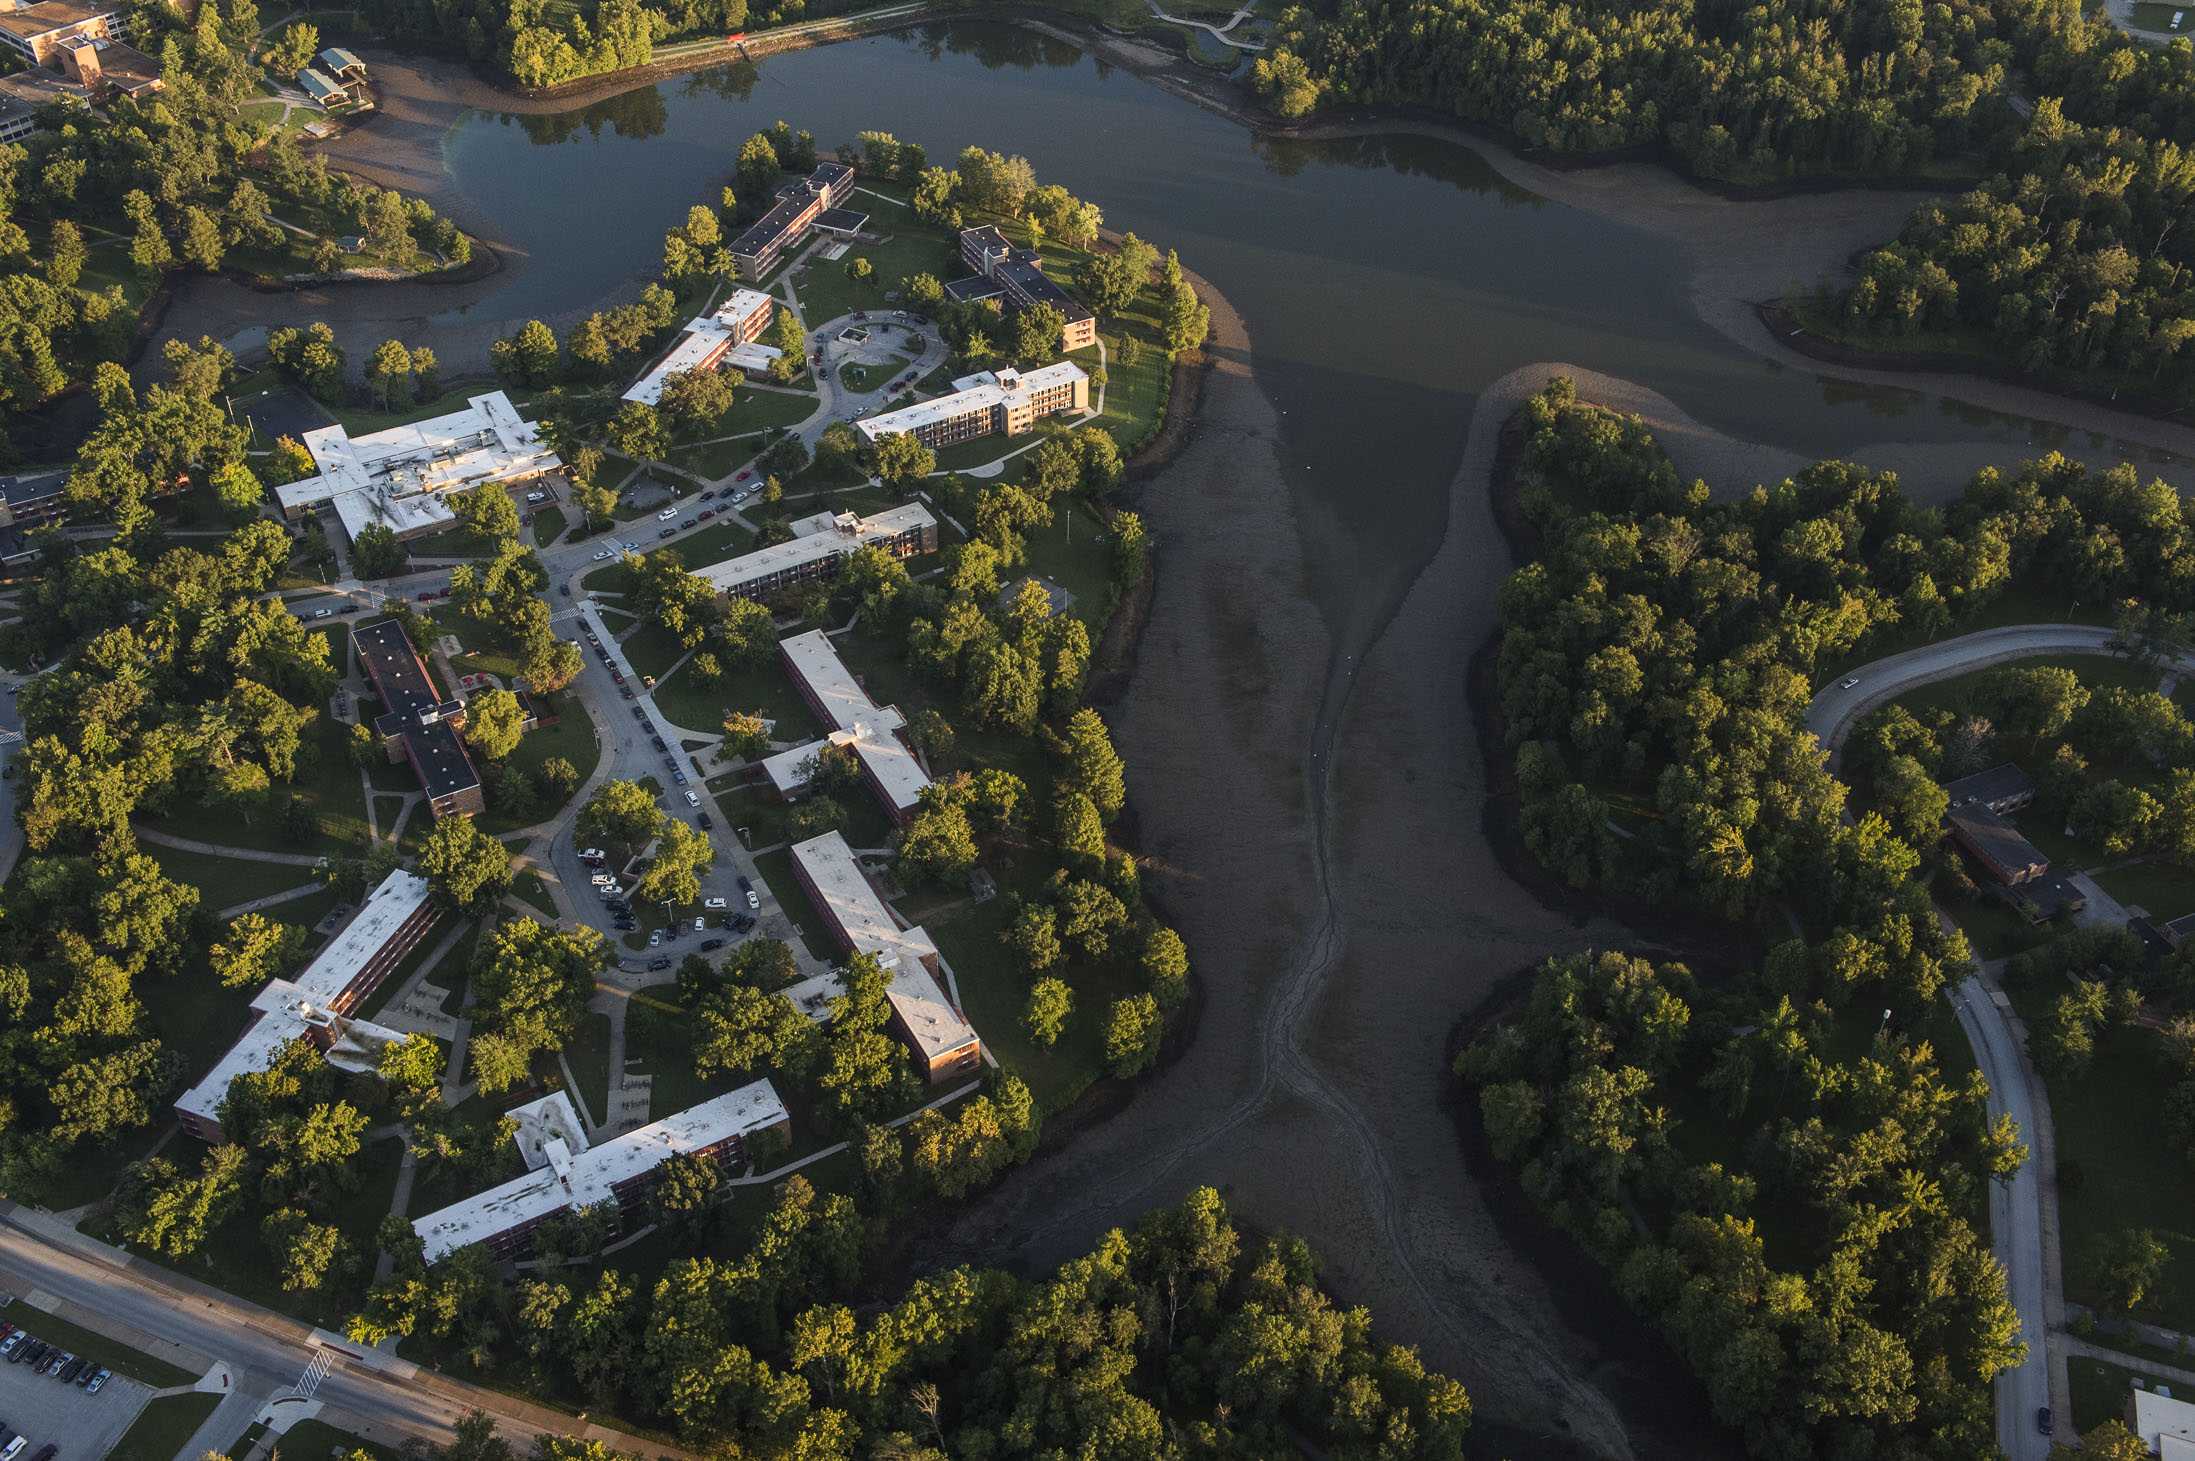 Campus lake shown from above on Saturday, Sept. 17, 2016 in Carbondale. (Ryan Michalesko | @photosbylesko)